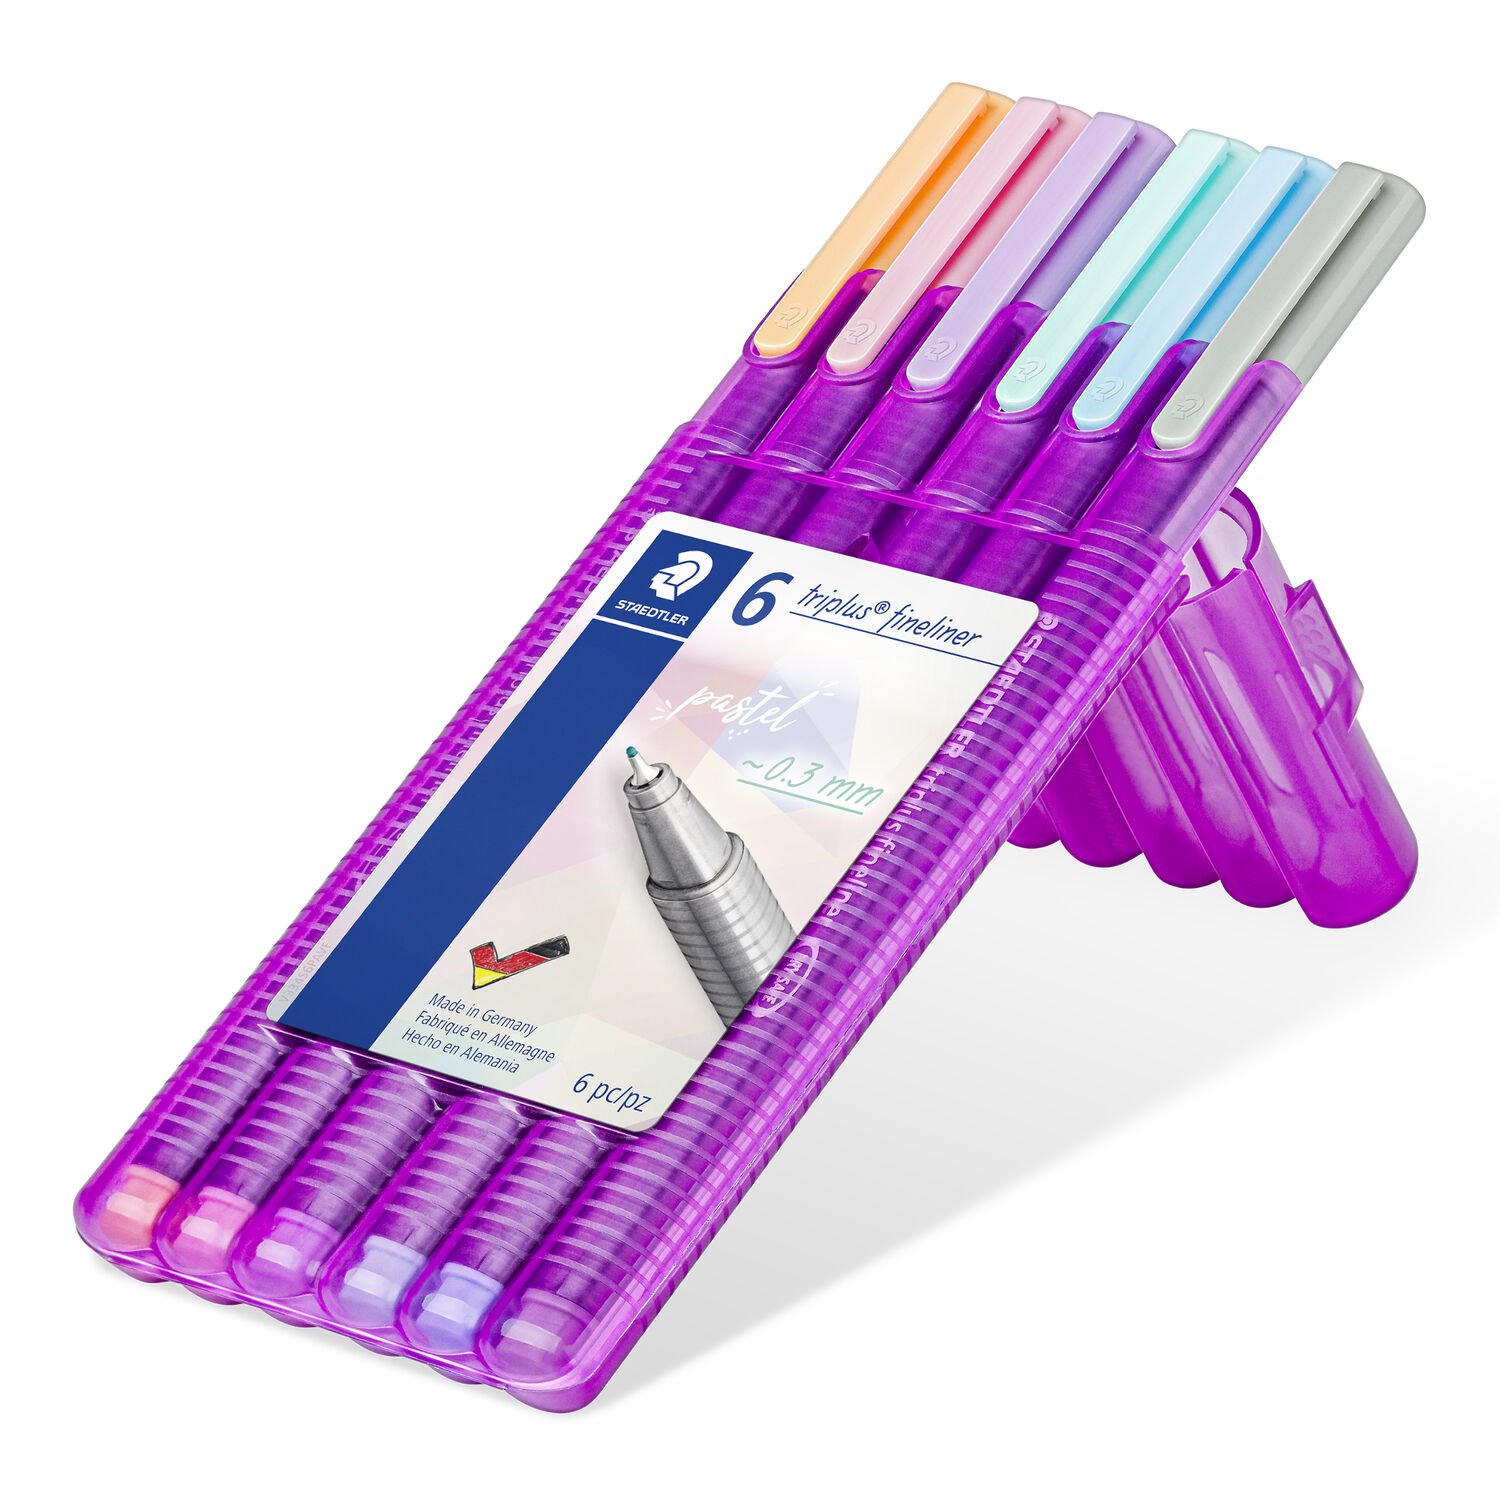 Staedtler Triplus Fineliners Various Packs Gift Sets of 6 Fine Line Pens  Tropical, Office, Blossom, Sepia, Ocean, Teacher Stationery -  Denmark